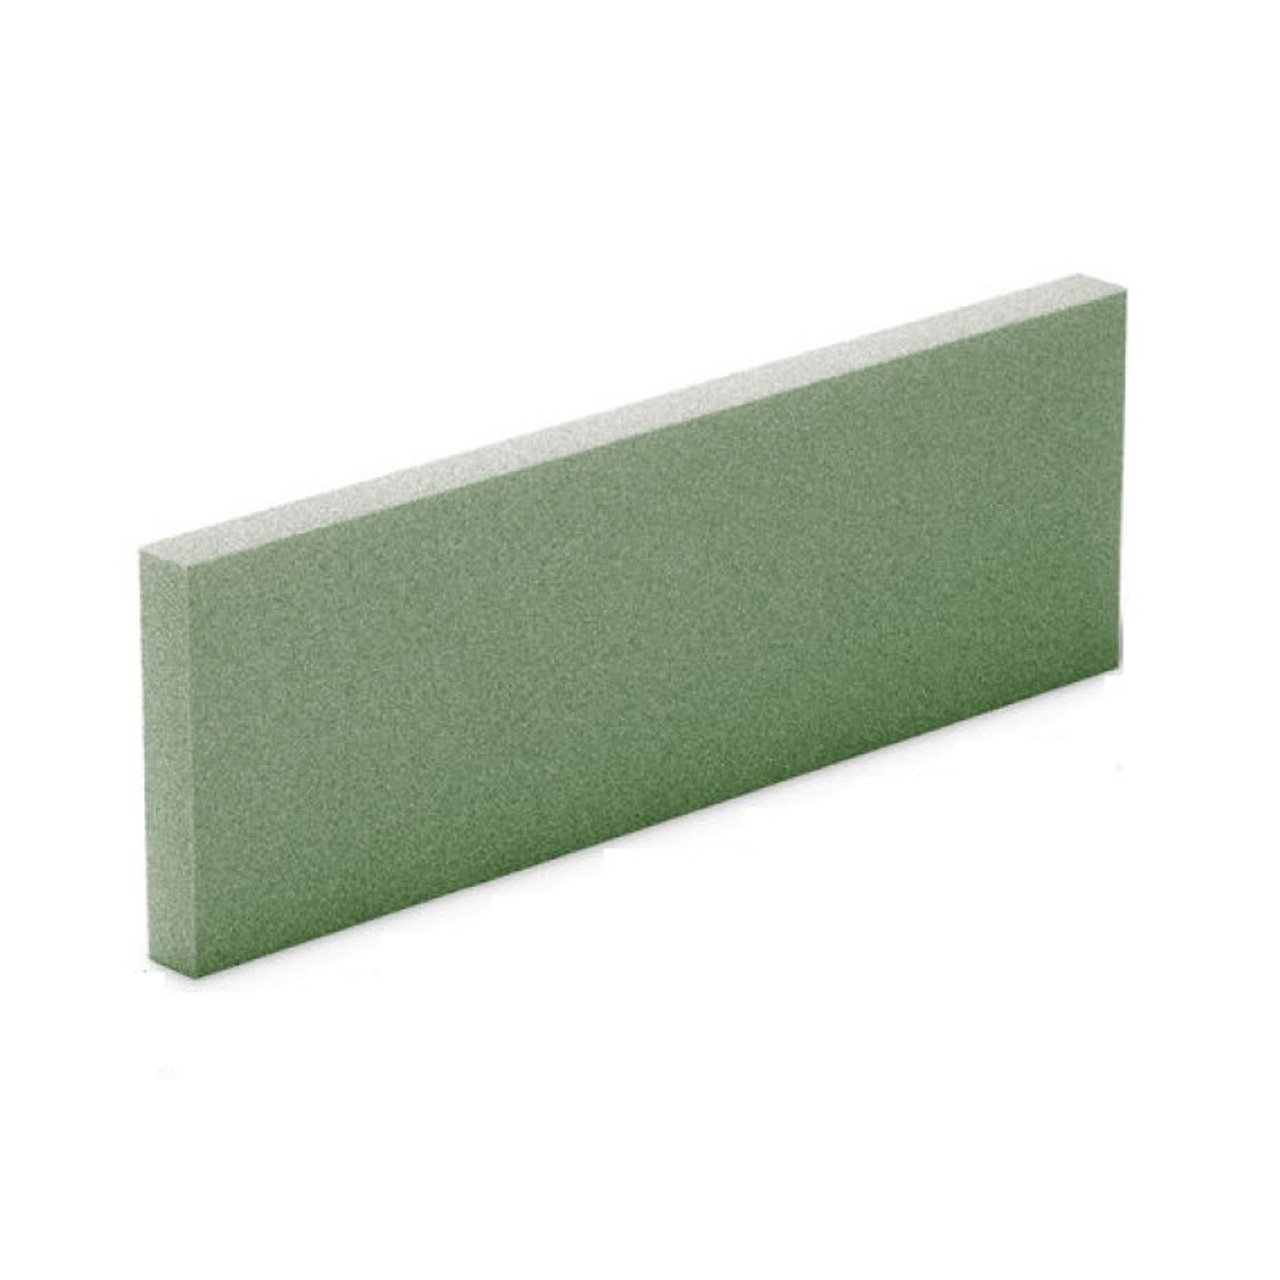 DirectFloral. Styrofoam™ Sheet - 2x 12x 36 Green